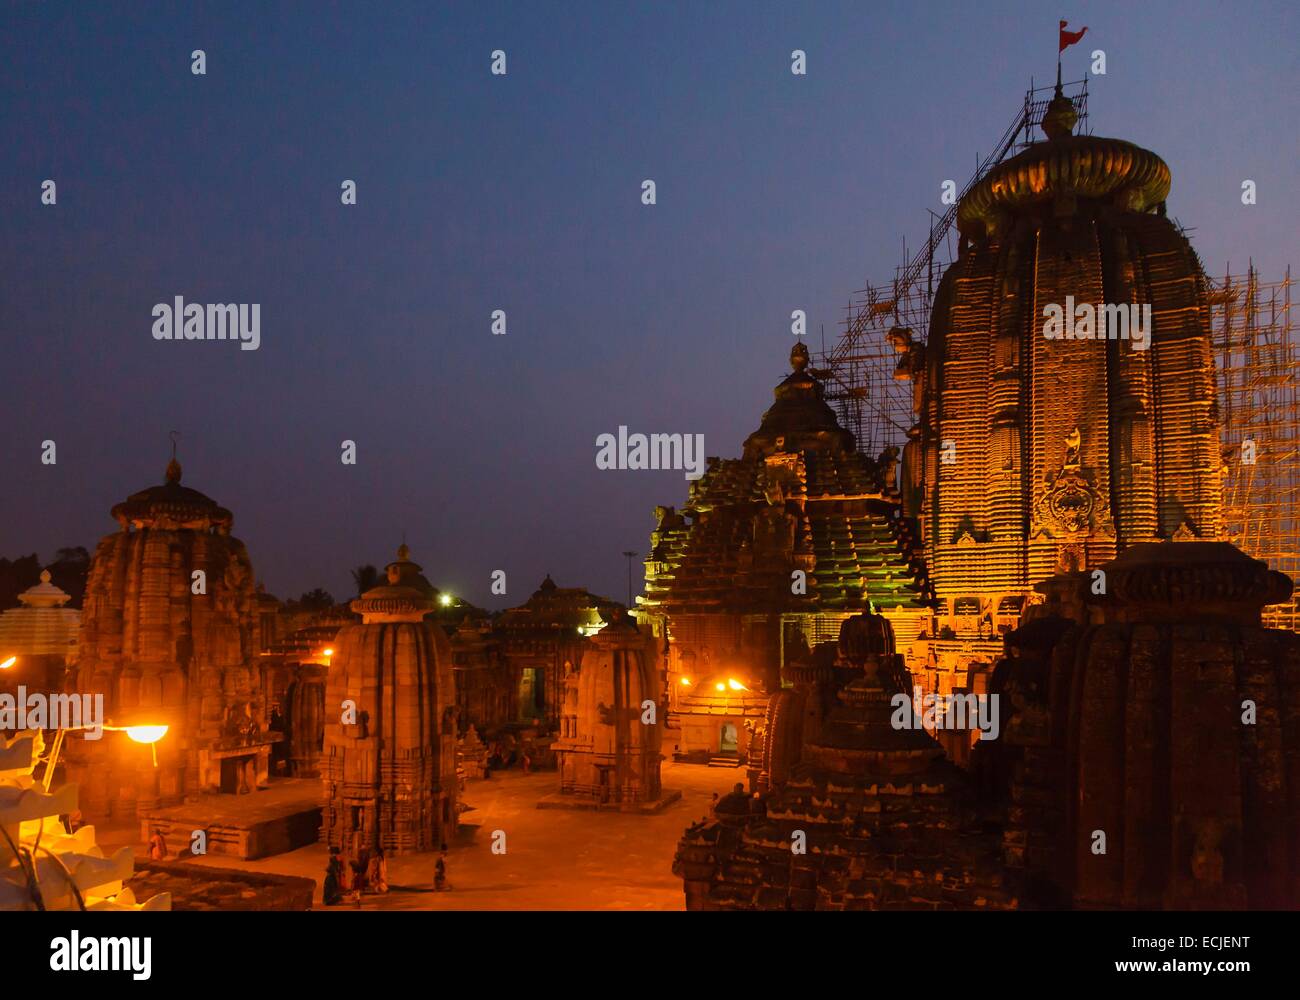 Lingaraj temple, bhubaneswar hi-res stock photography and images - Alamy